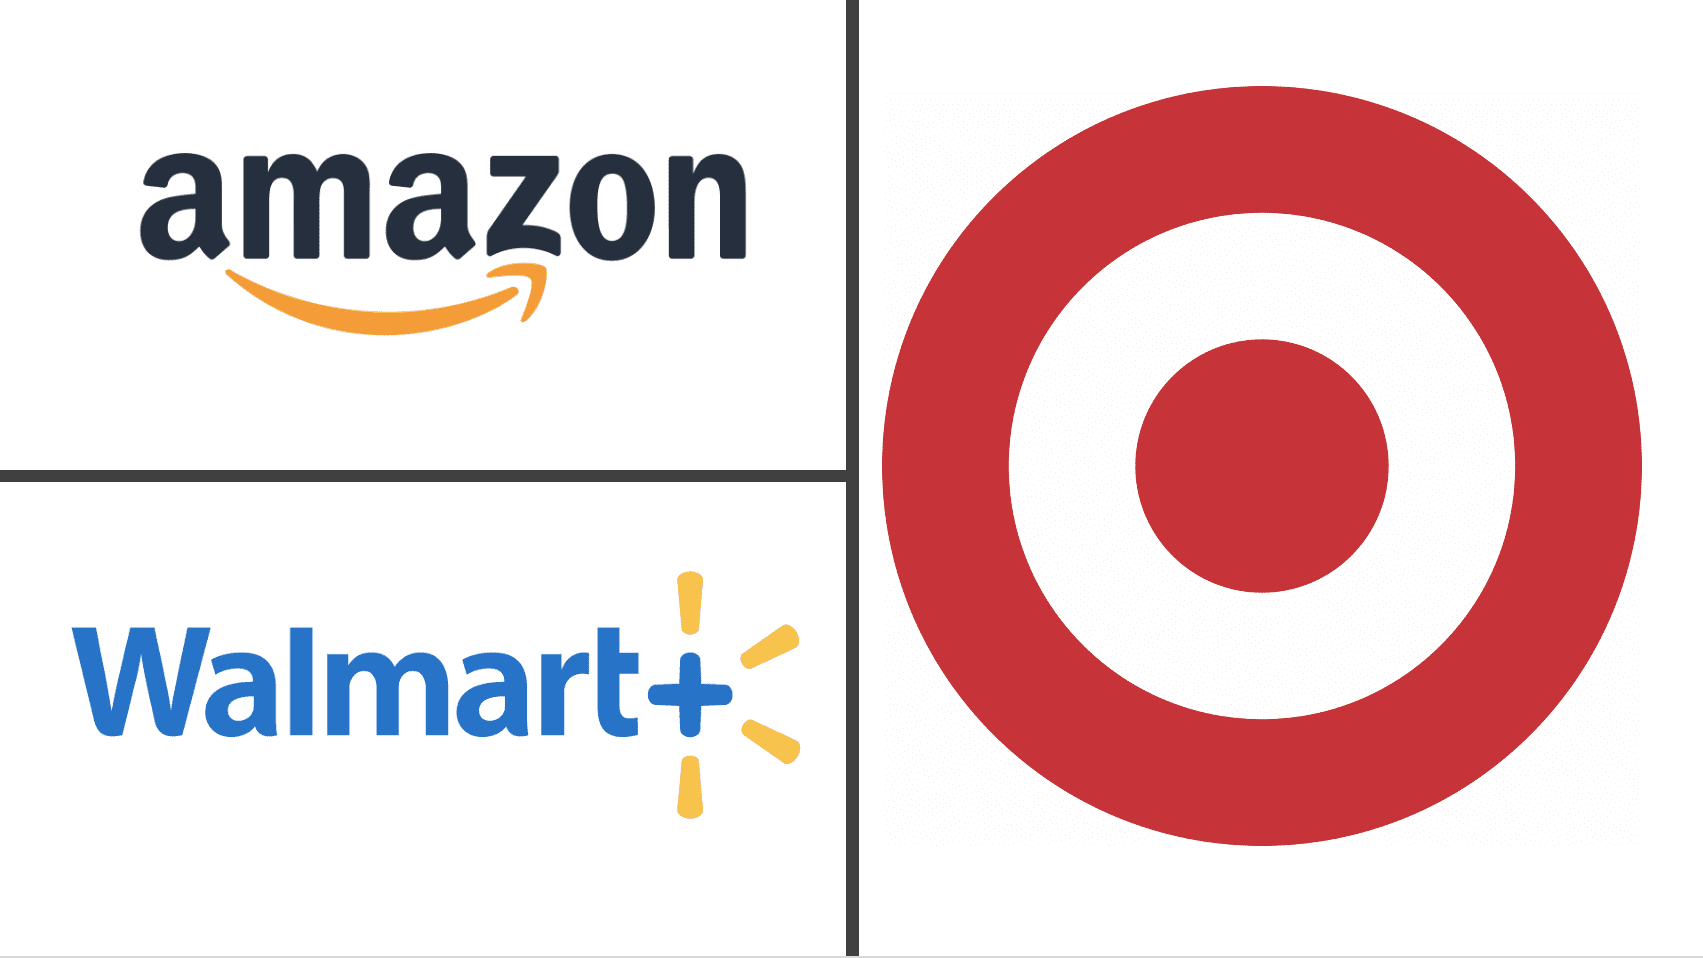 Amazon, Target, and Walmart logos